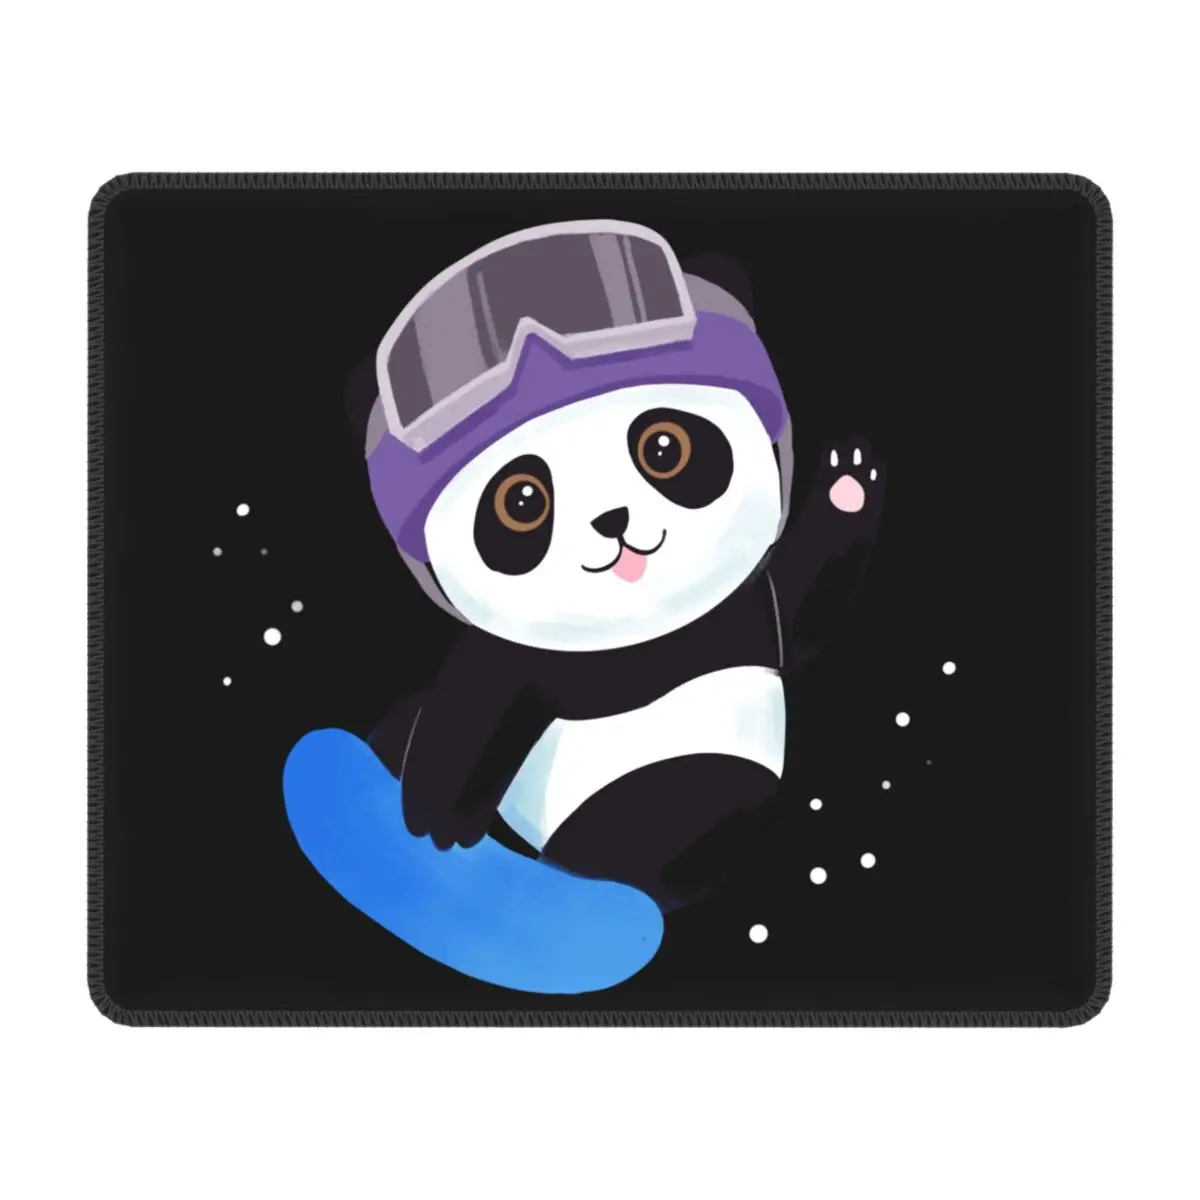 Giant Panda Skating Mouse Pad Customized Anti-Slip Rubber Base Gaming Mousepad Accessories Cute Bear Office Laptop Mat